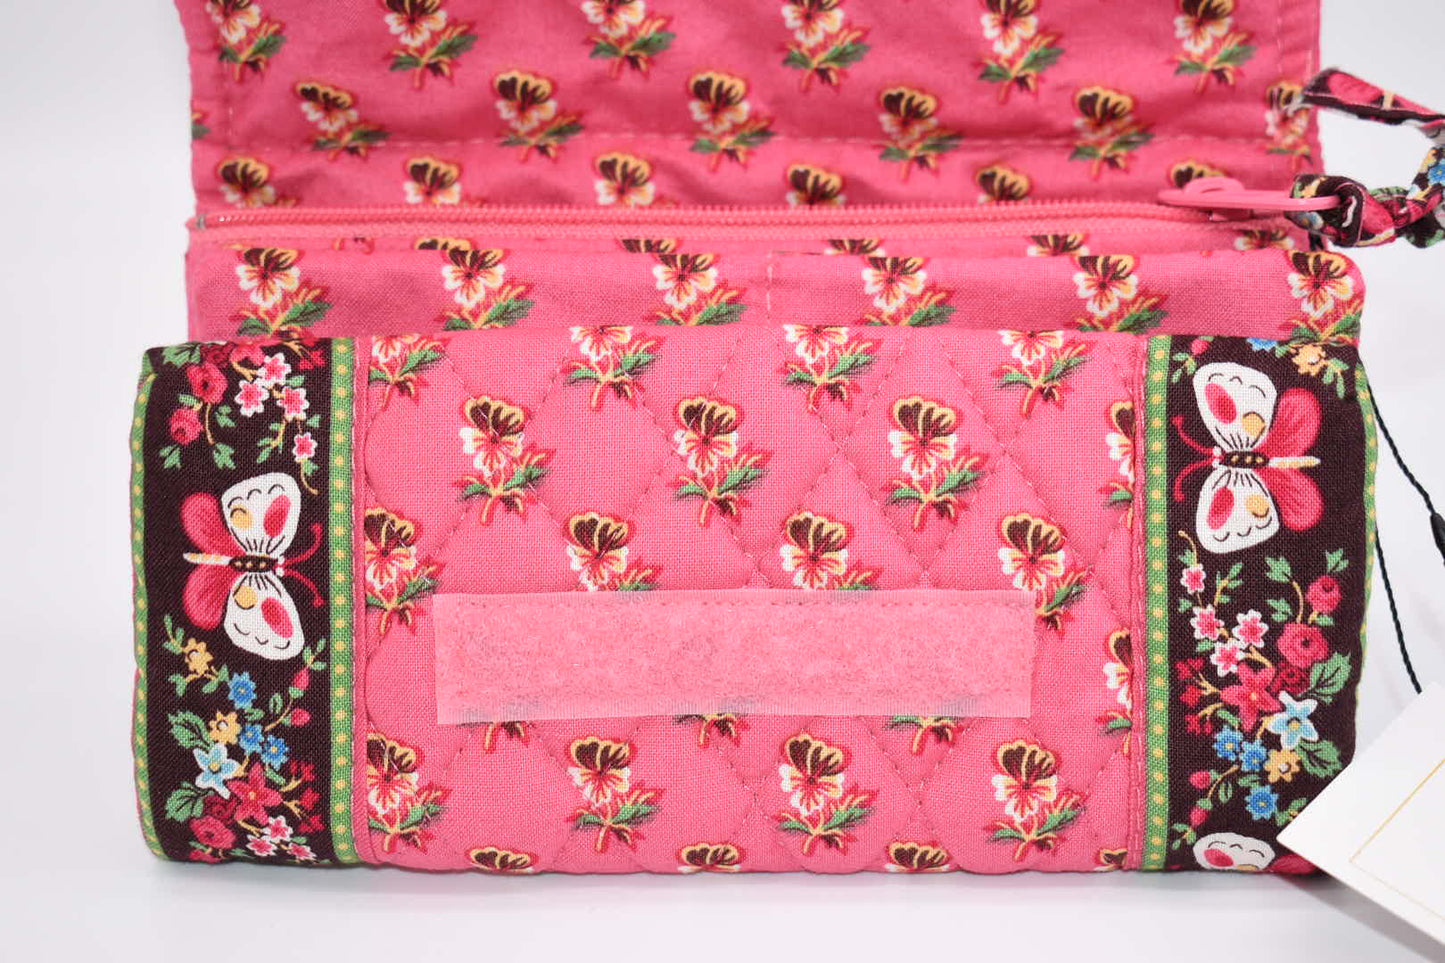 Vera Bradley Strap Wallet / Crossbody in "Pink Pansy" Pattern